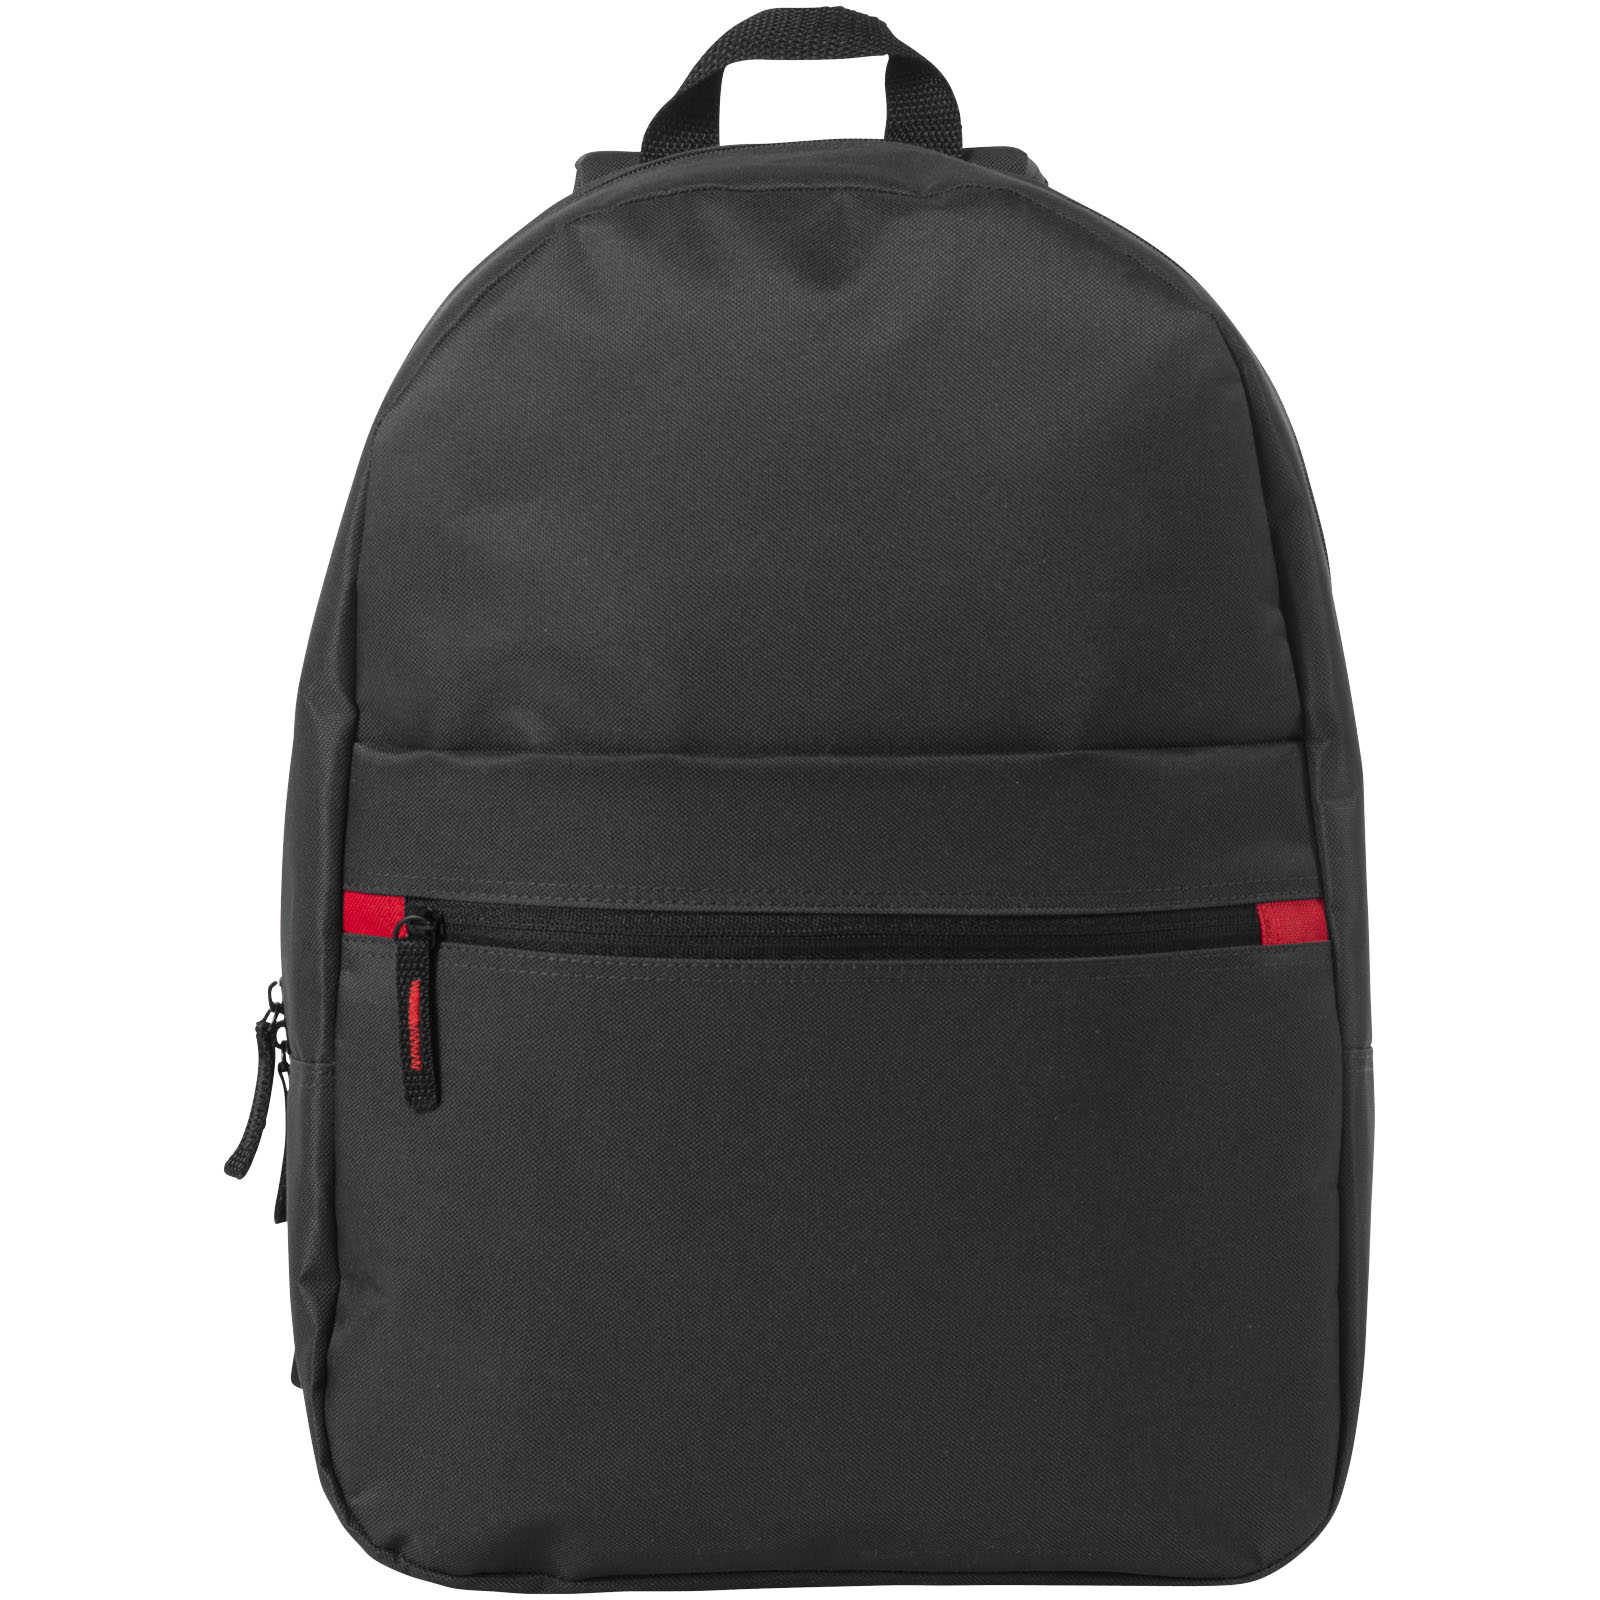 Advertising Backpacks - Vancouver backpack 23L - 1